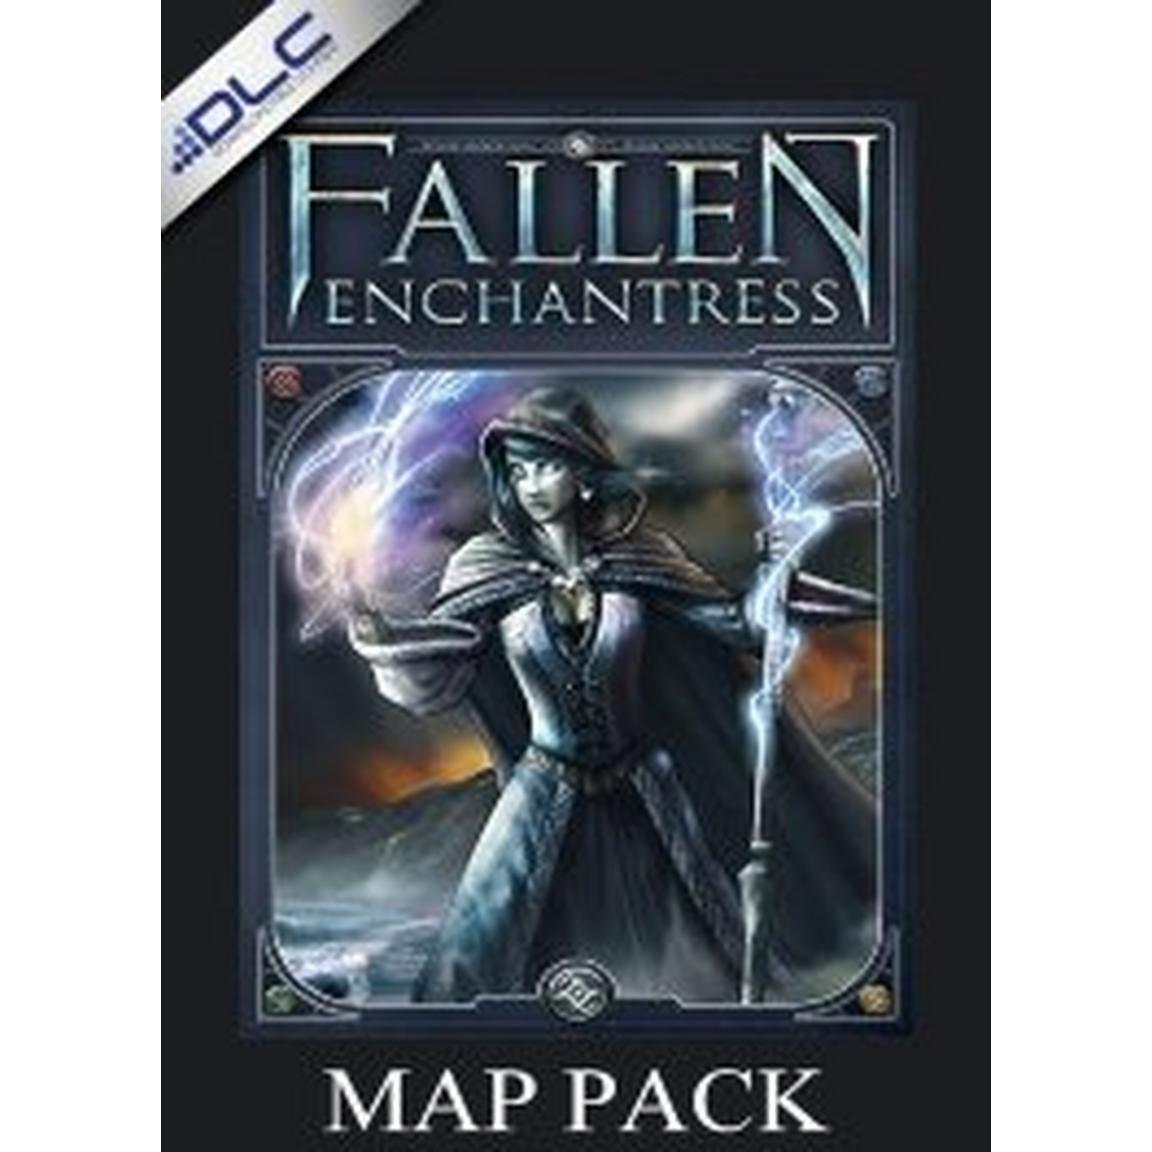 Stardock Fallen Enchantress Map Pack DLC - PC